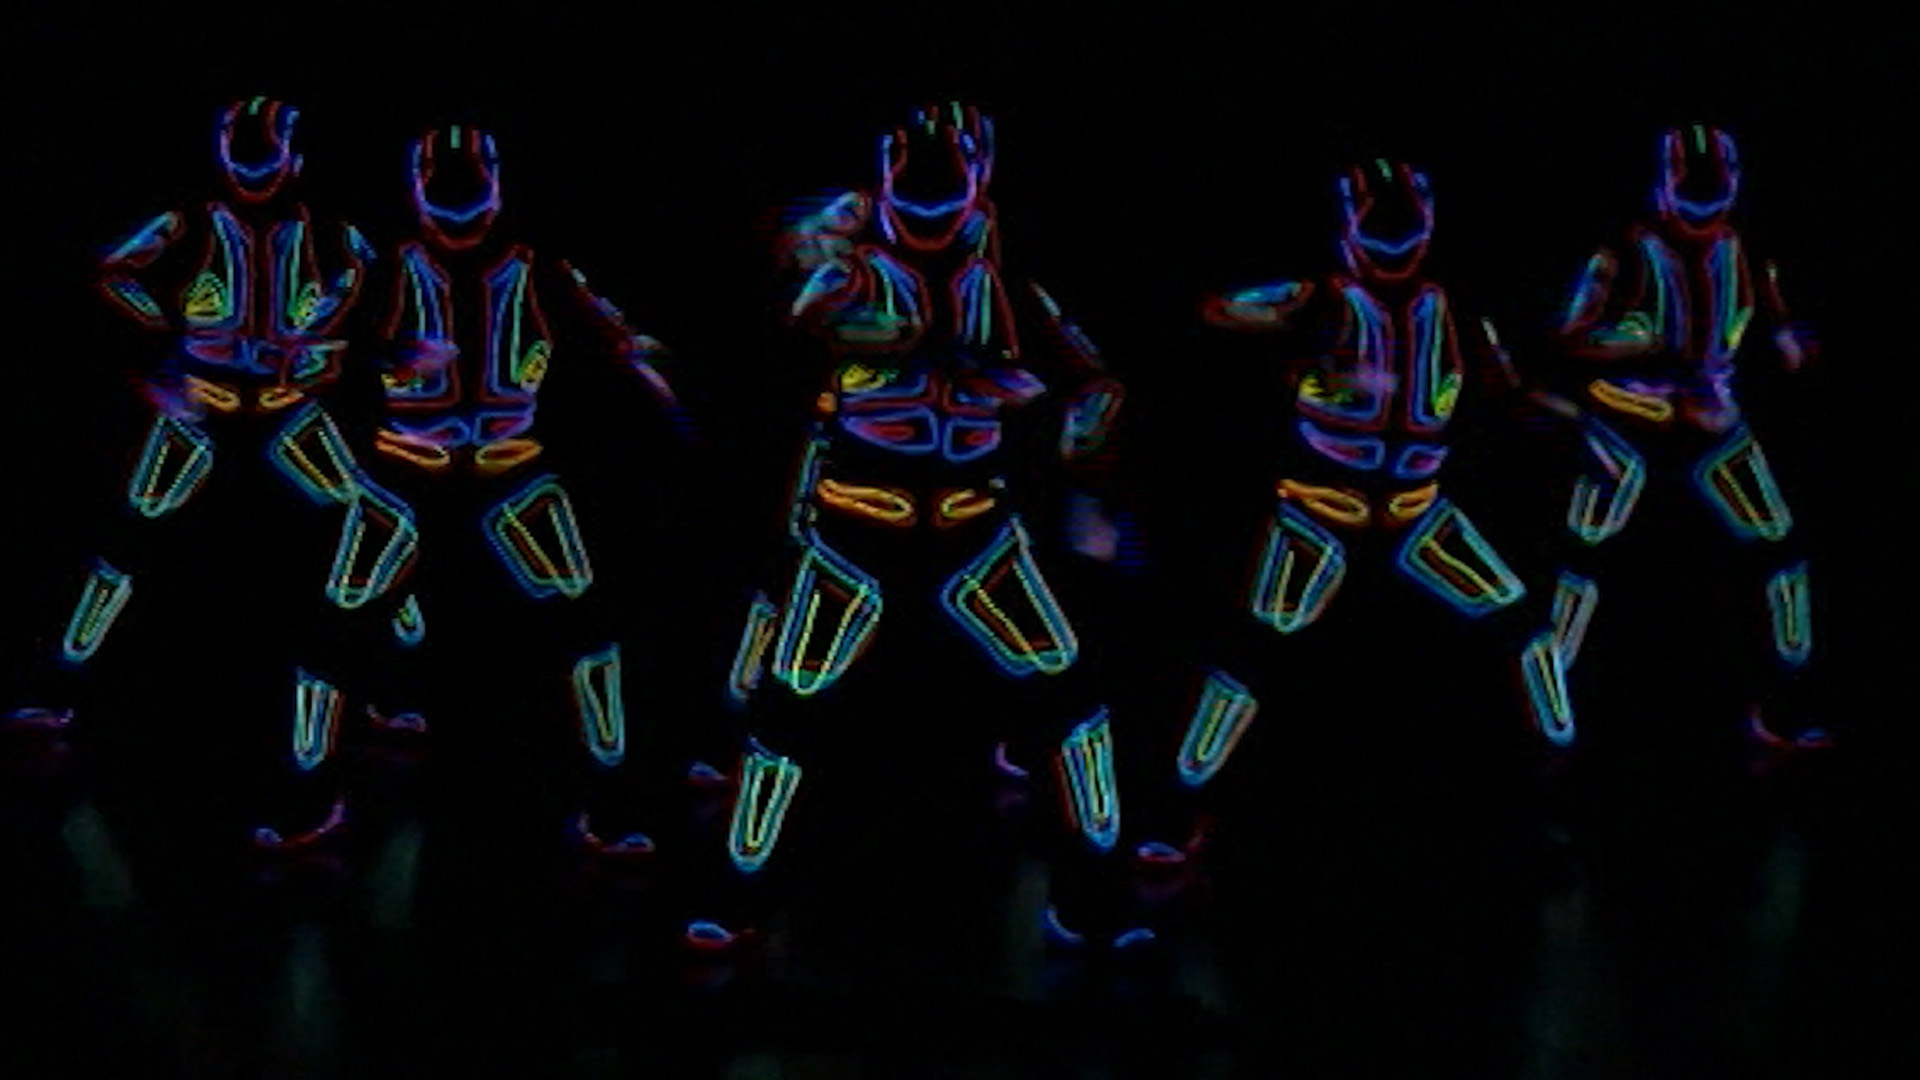 LED costume dance act - Freestyletalent